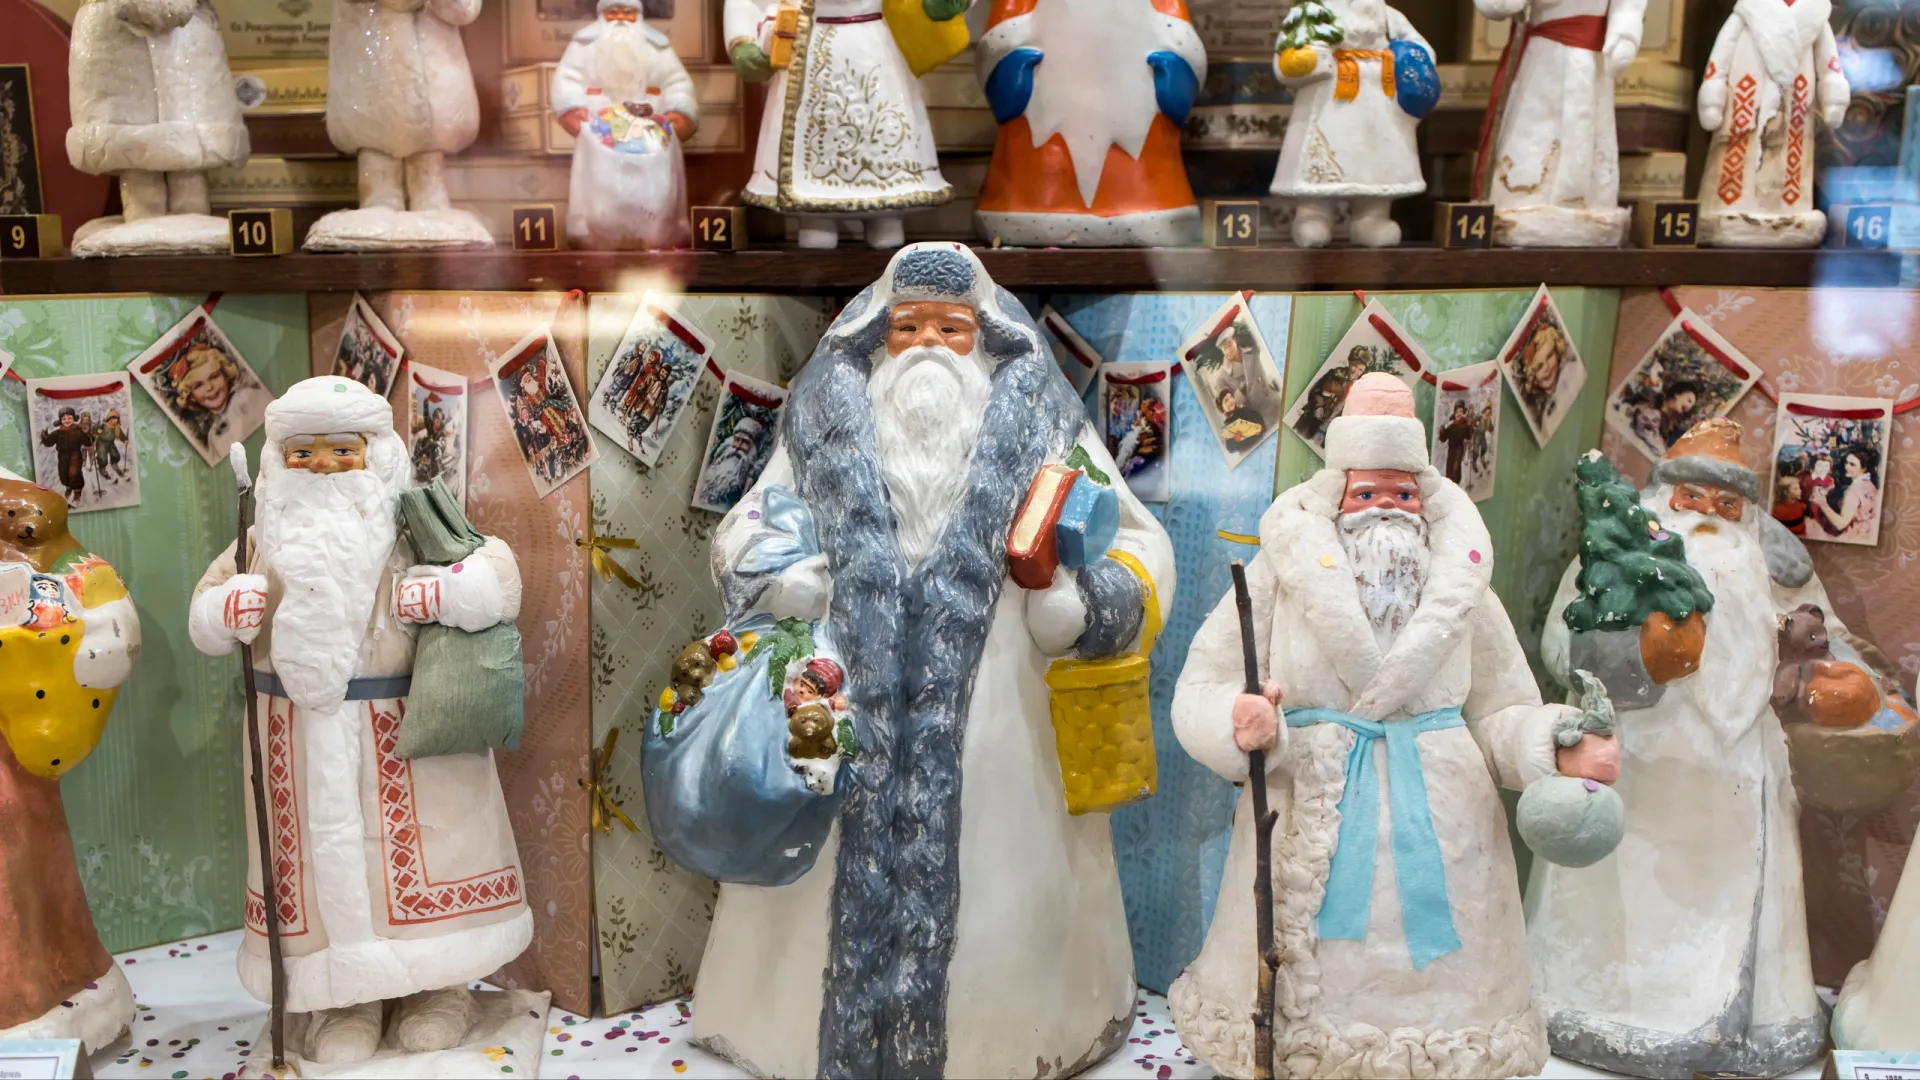 Коллекция фигурок Деда Мороза из коломенского музея. Фото: Elena Rostunova / Shutterstock / Fotodom